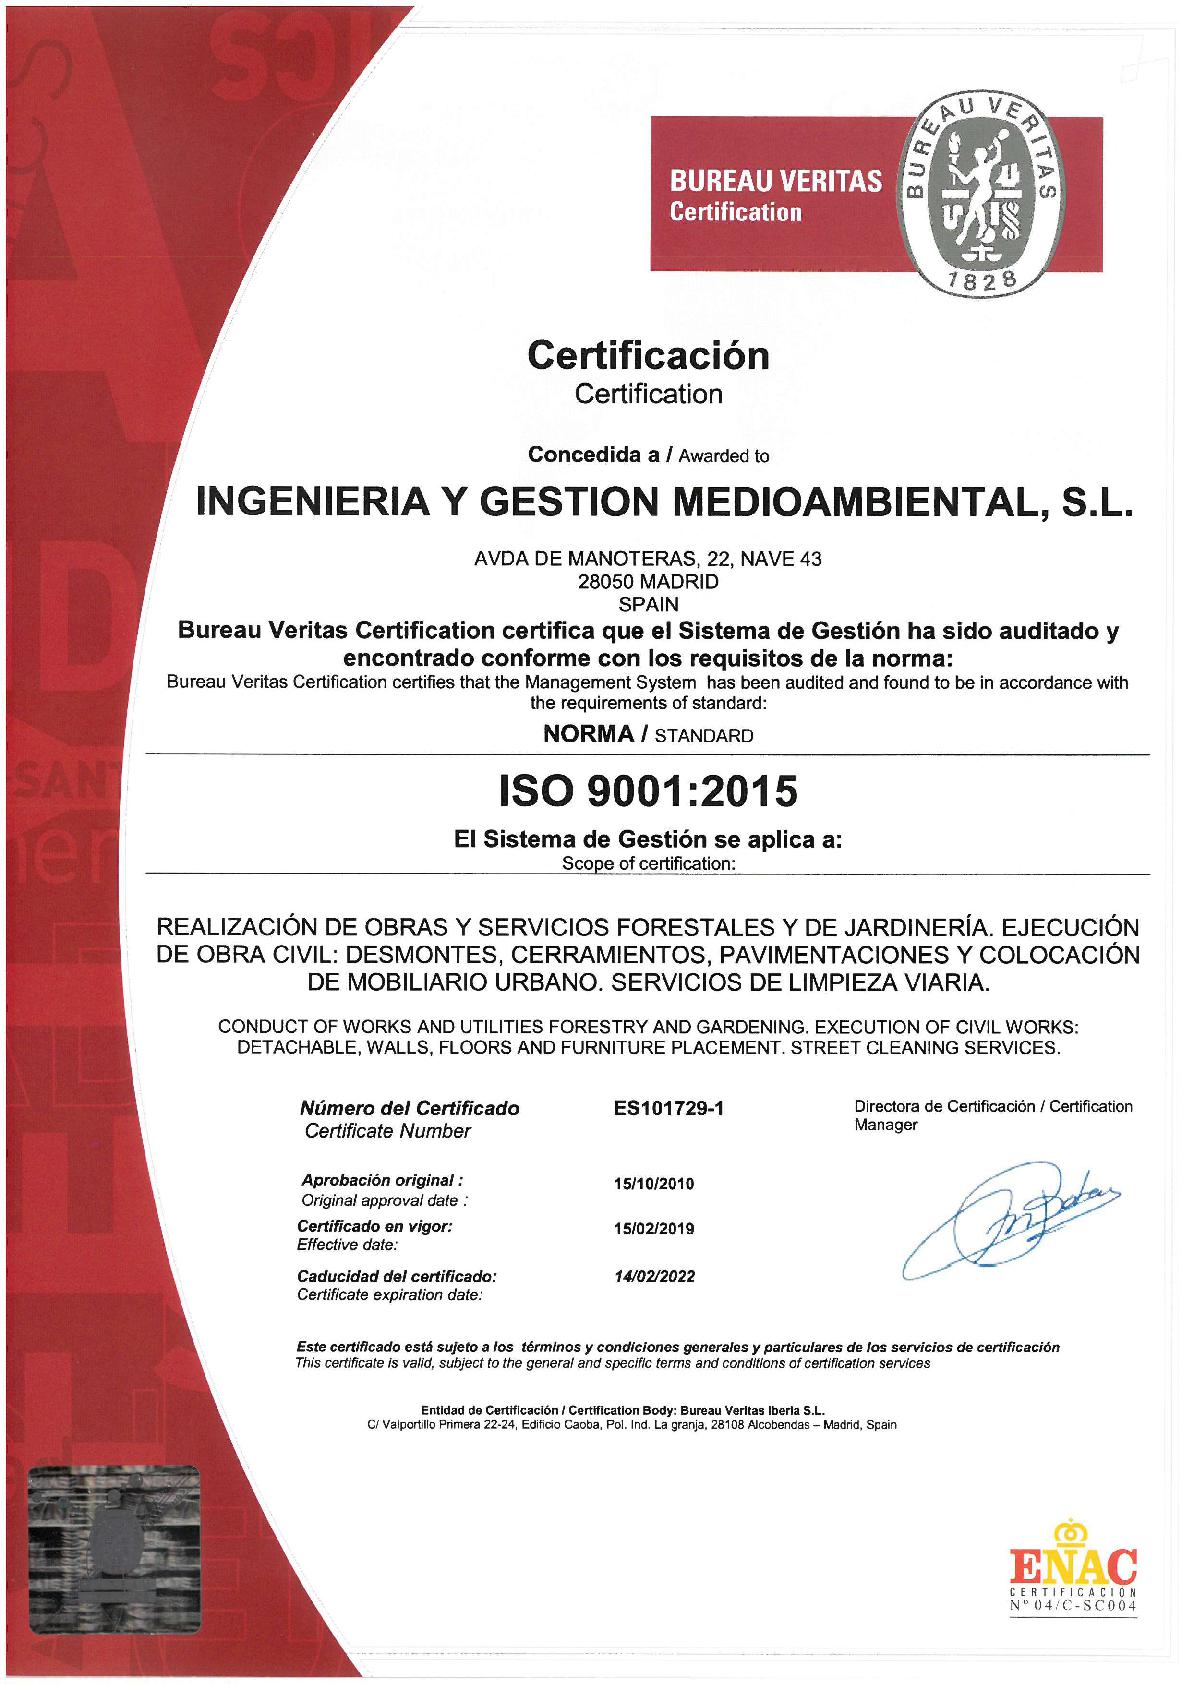 ISO 9001 (caduca 14-02-2022)-001